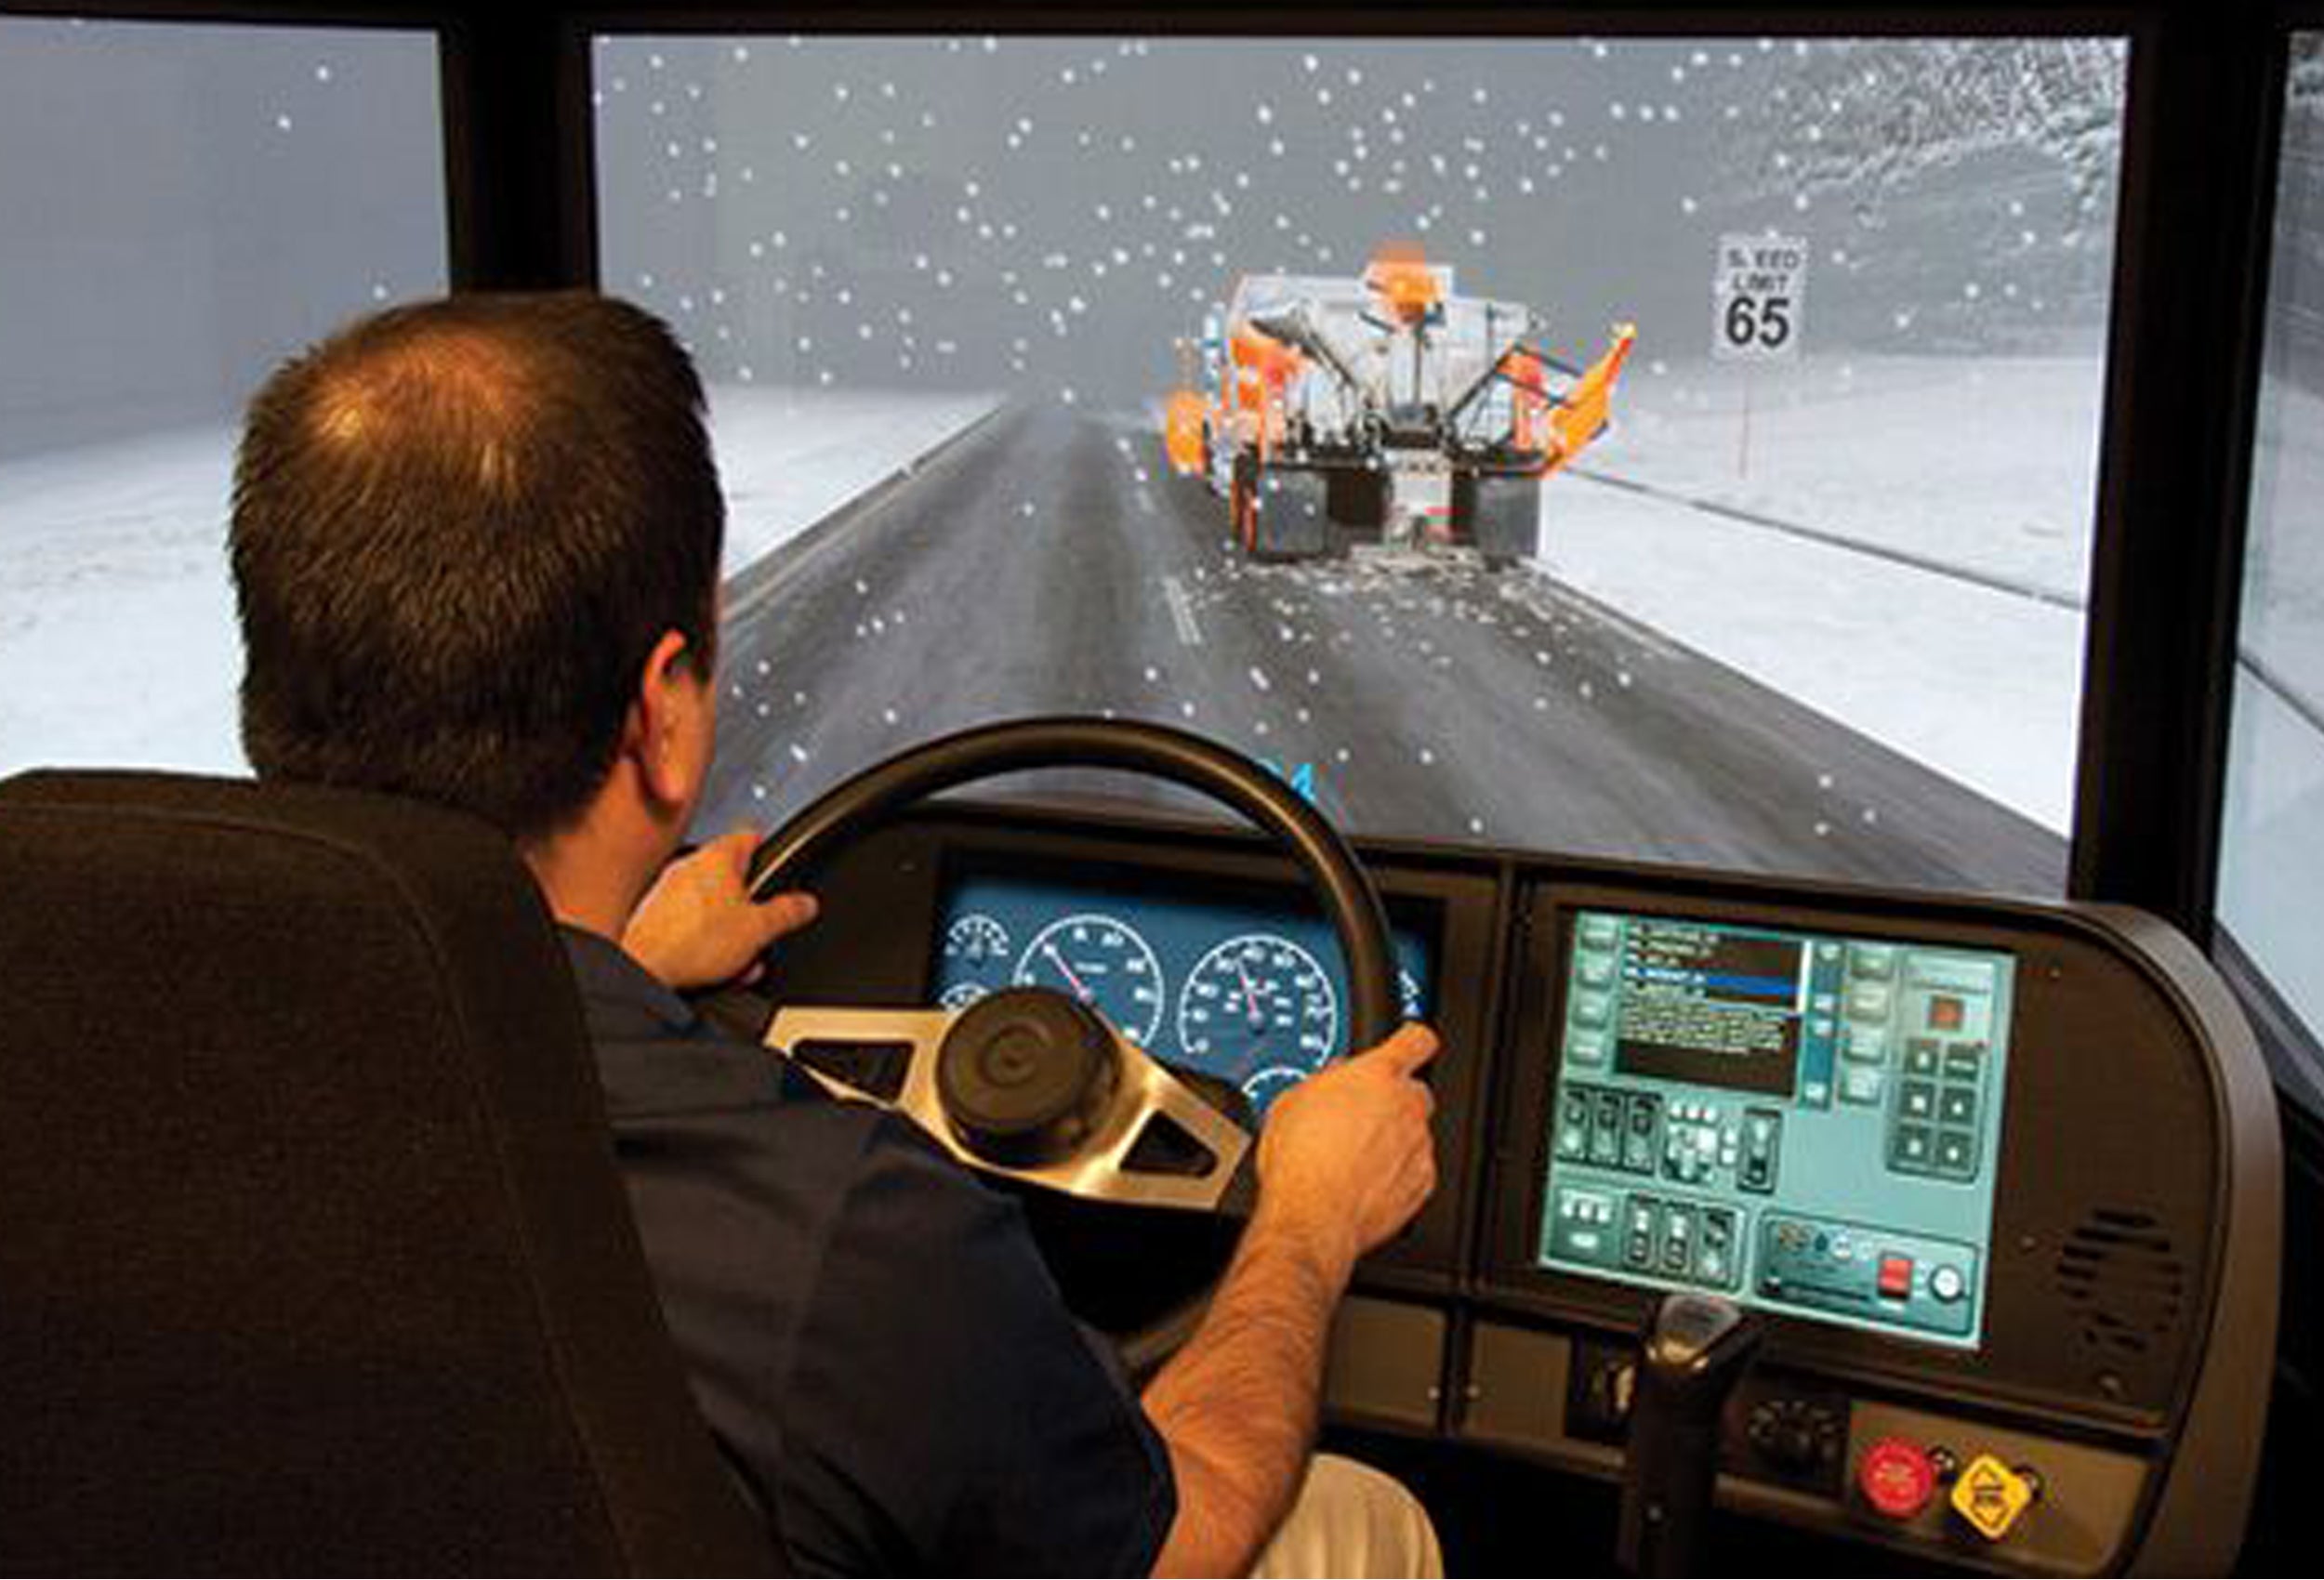 Driving Simulators  L3Harris® Fast. Forward.